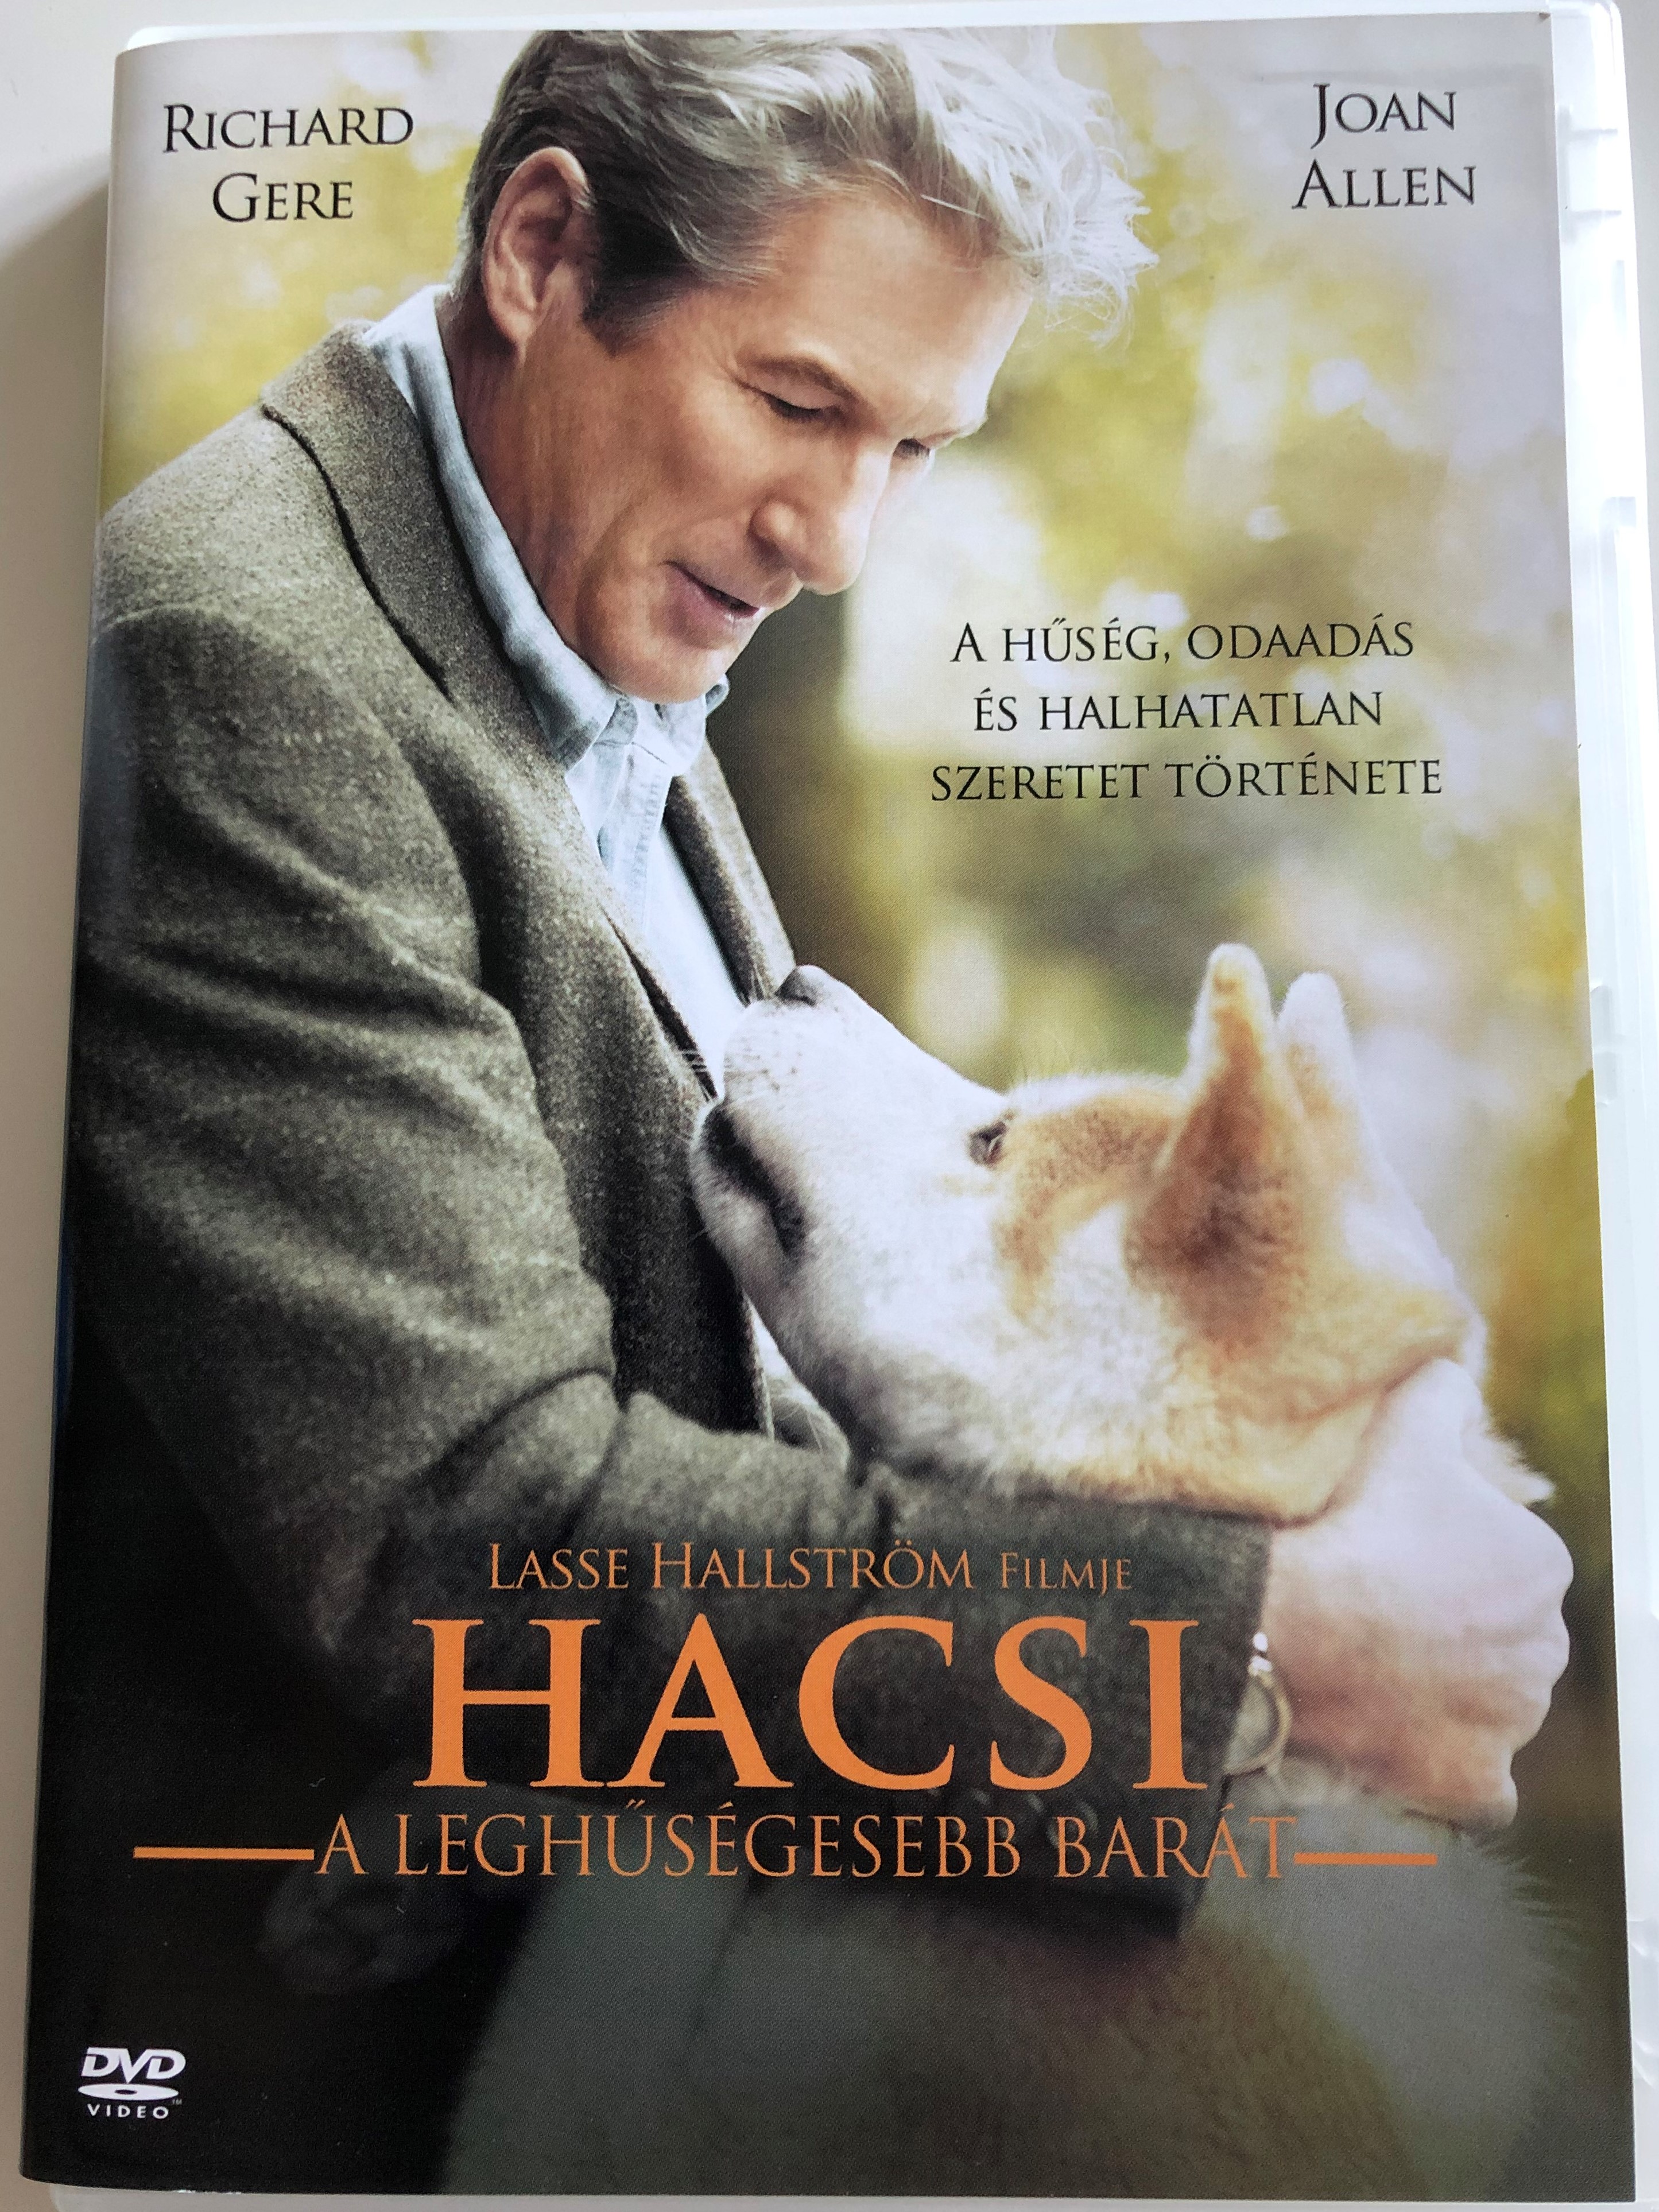 Hachiko: A Dog's Story DVD 2008 Hacsi a leghűségesebb barát / Directed by  Lasse Hallstrom / Starring: Richard Gere, Joan Allen / Hachi: A Dog's Tale  - bibleinmylanguage